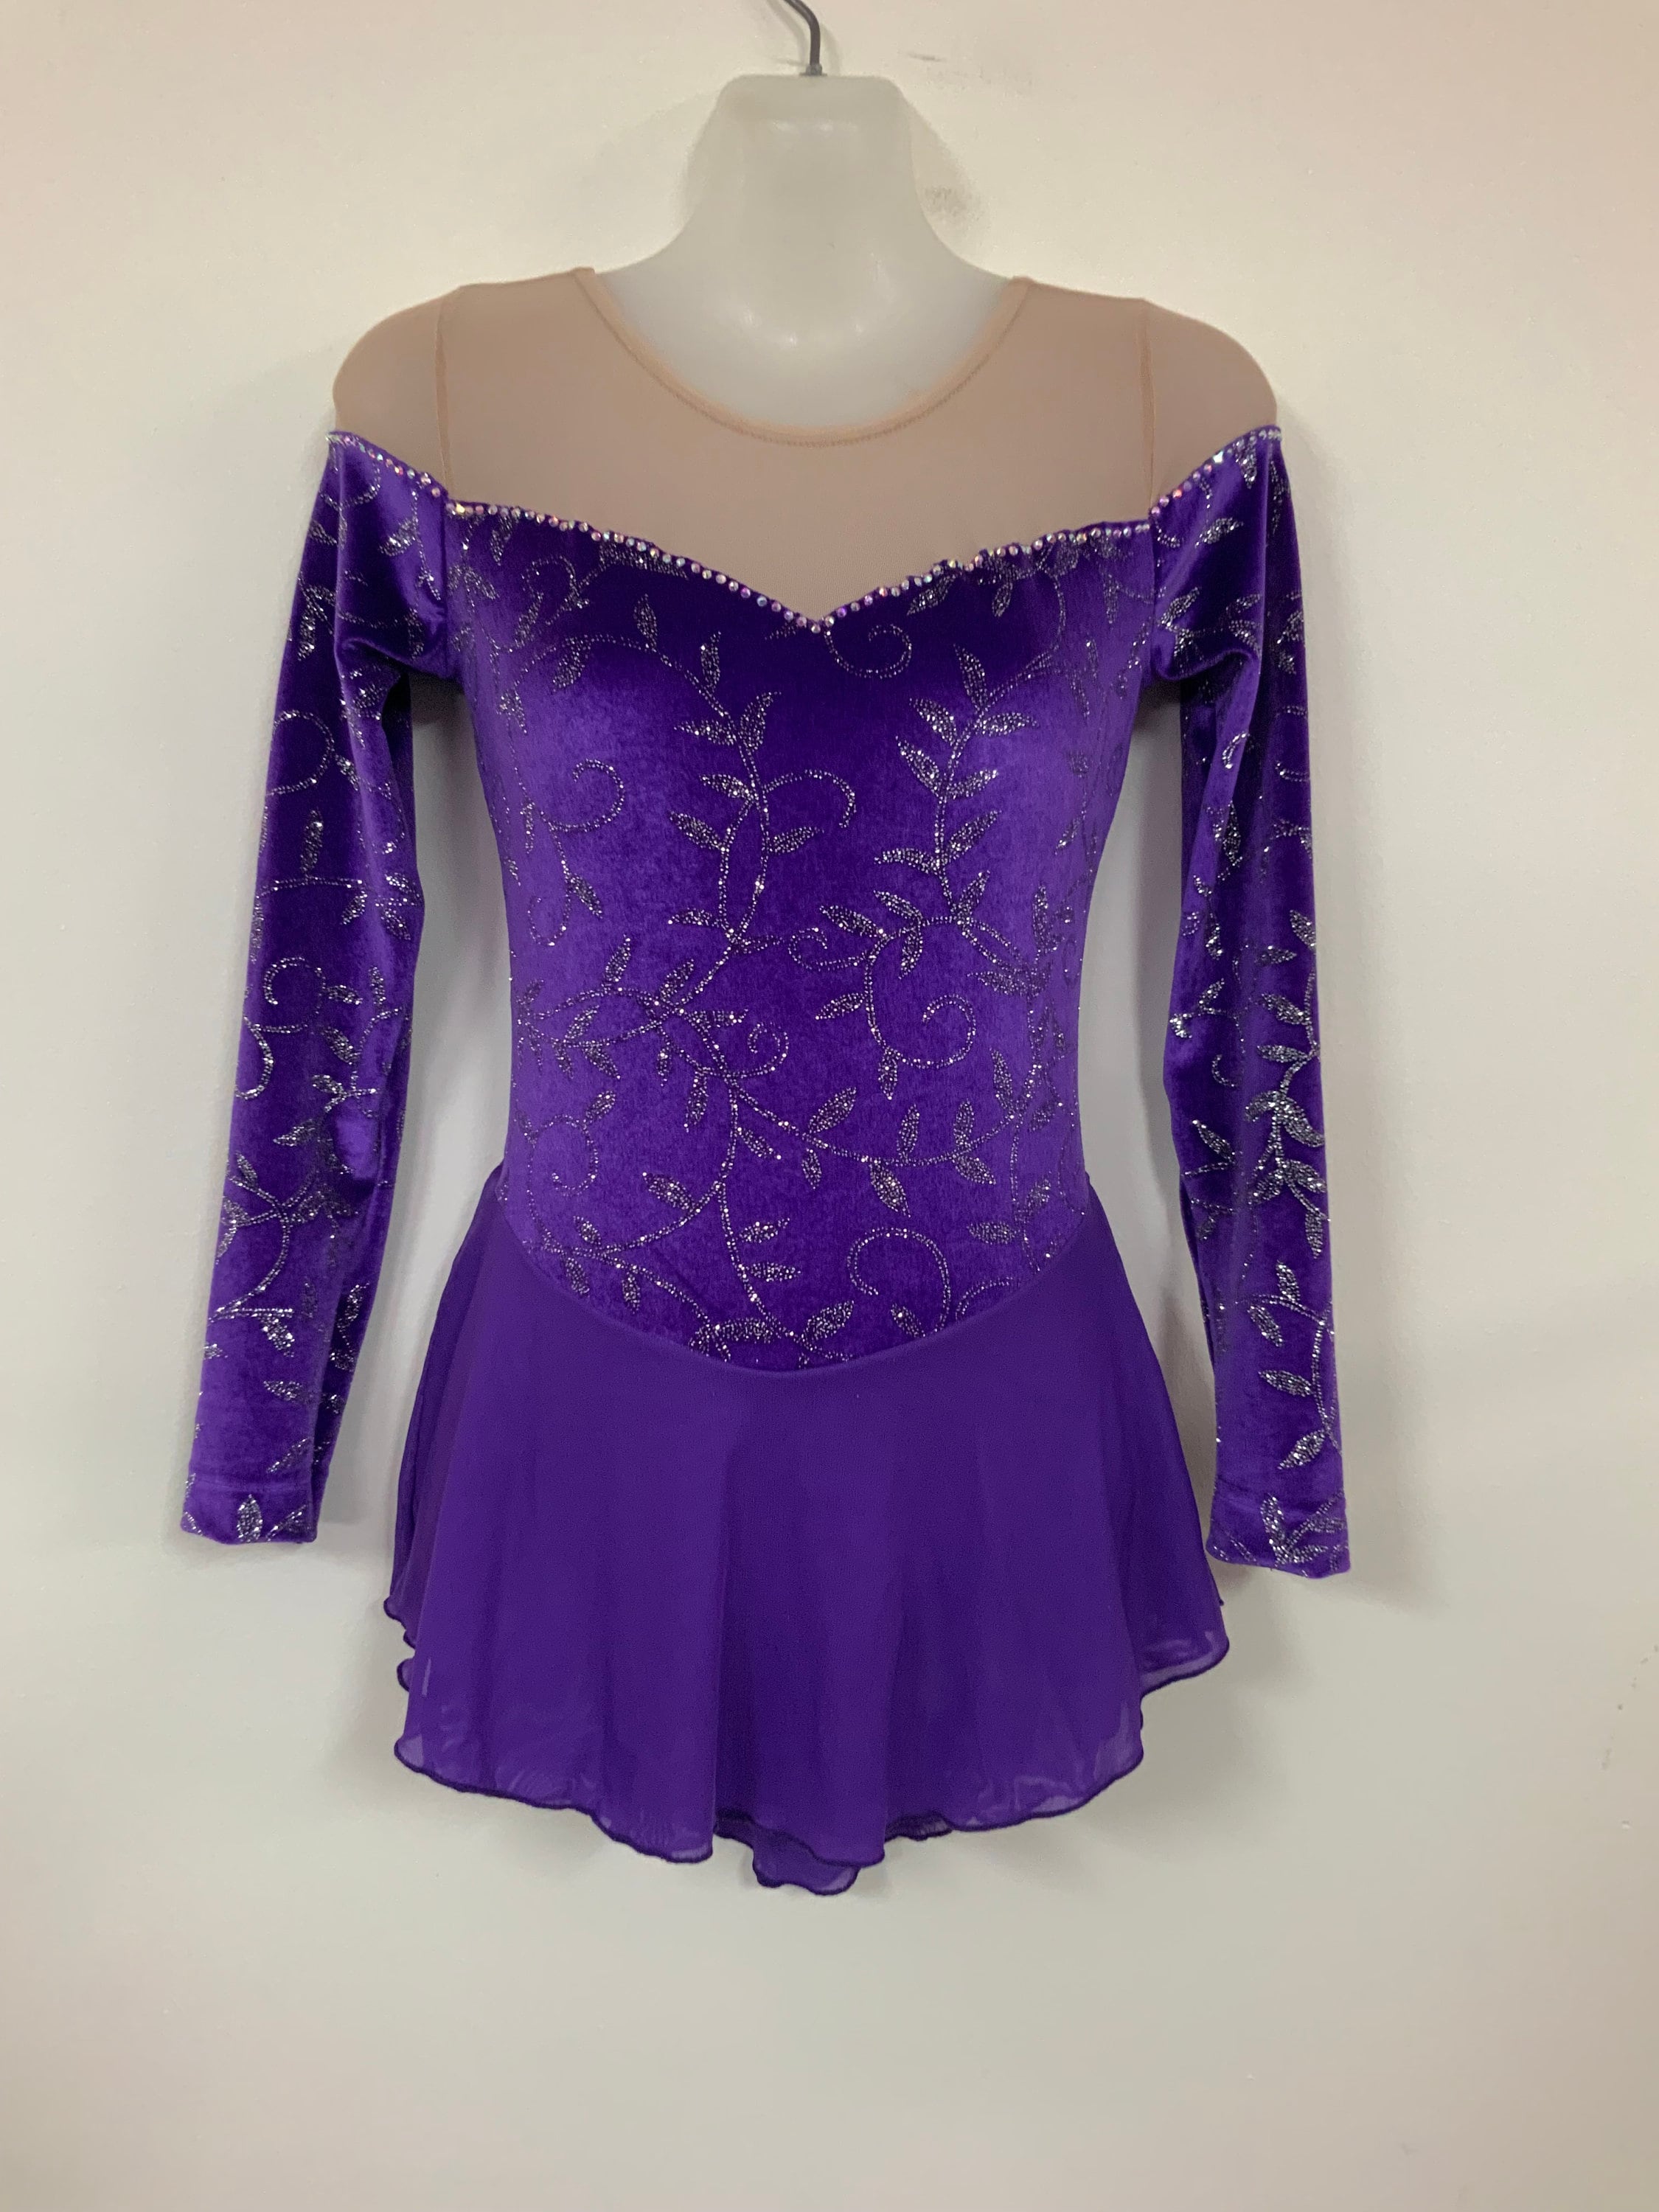 Long sleeve “IceDress Lite” (purple and black) – Figure Skating